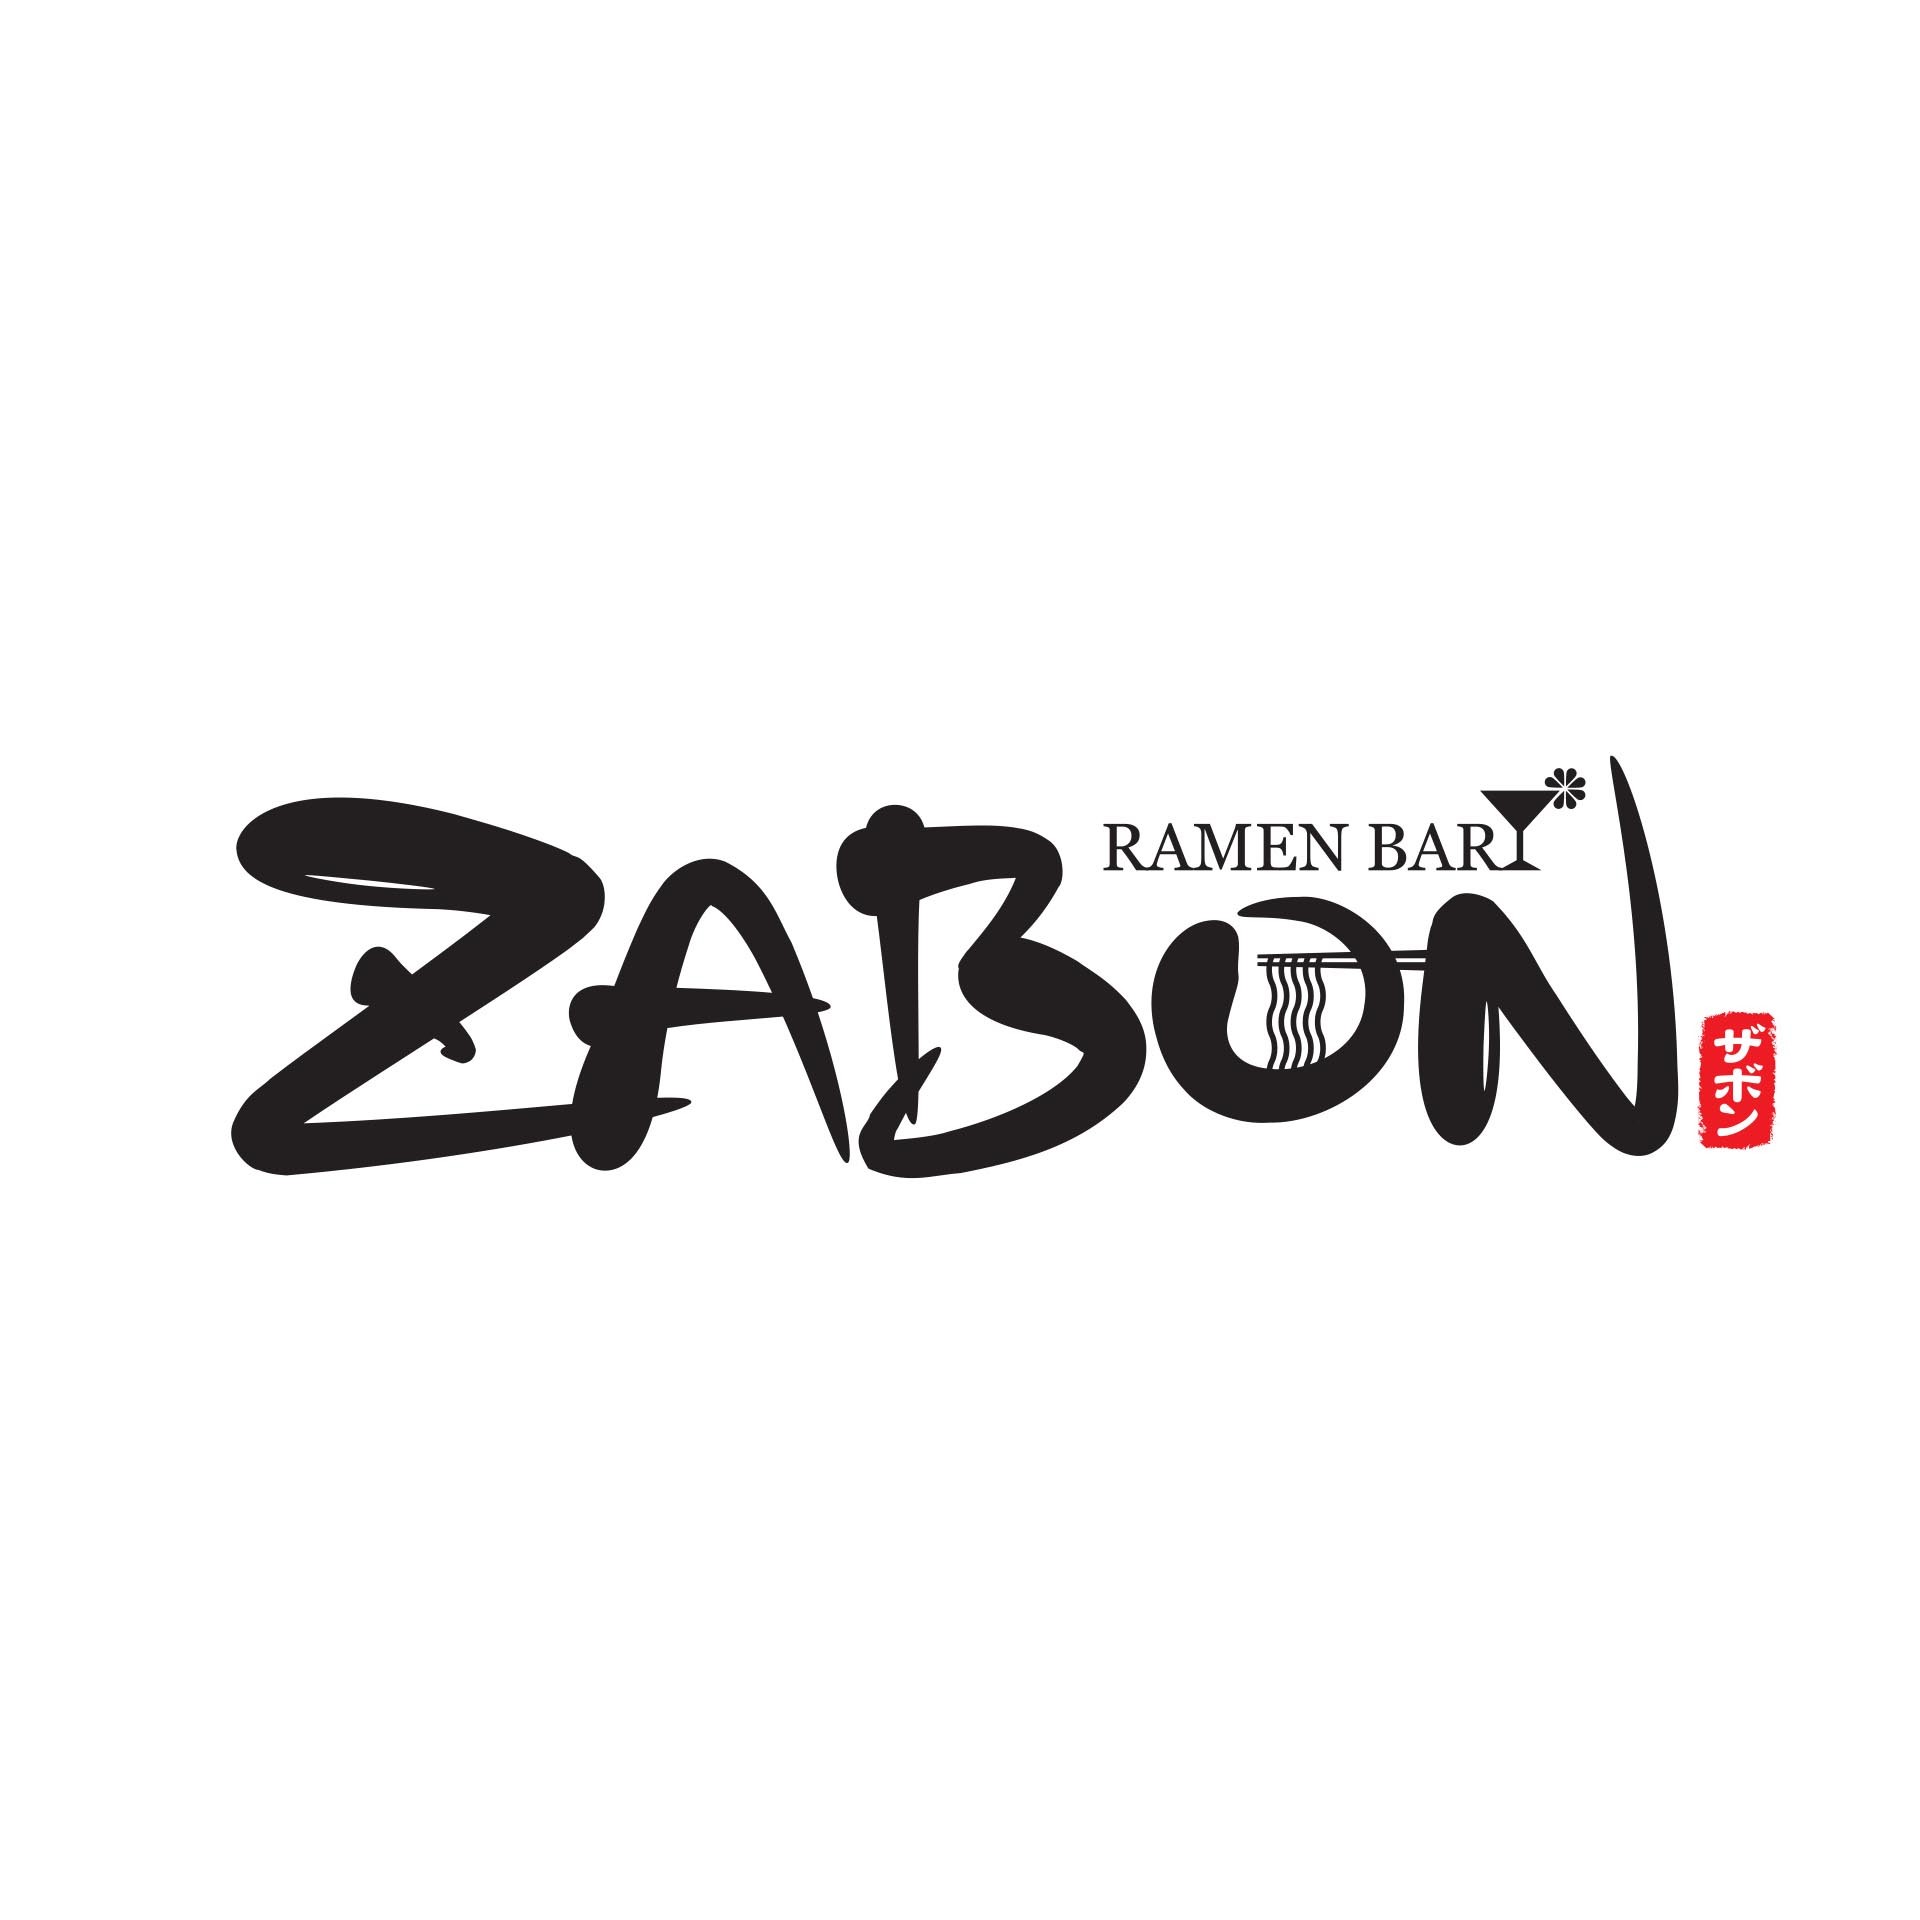 Zabon Ramen and Rolls 440 S.Anaheim Blvd, #202-203